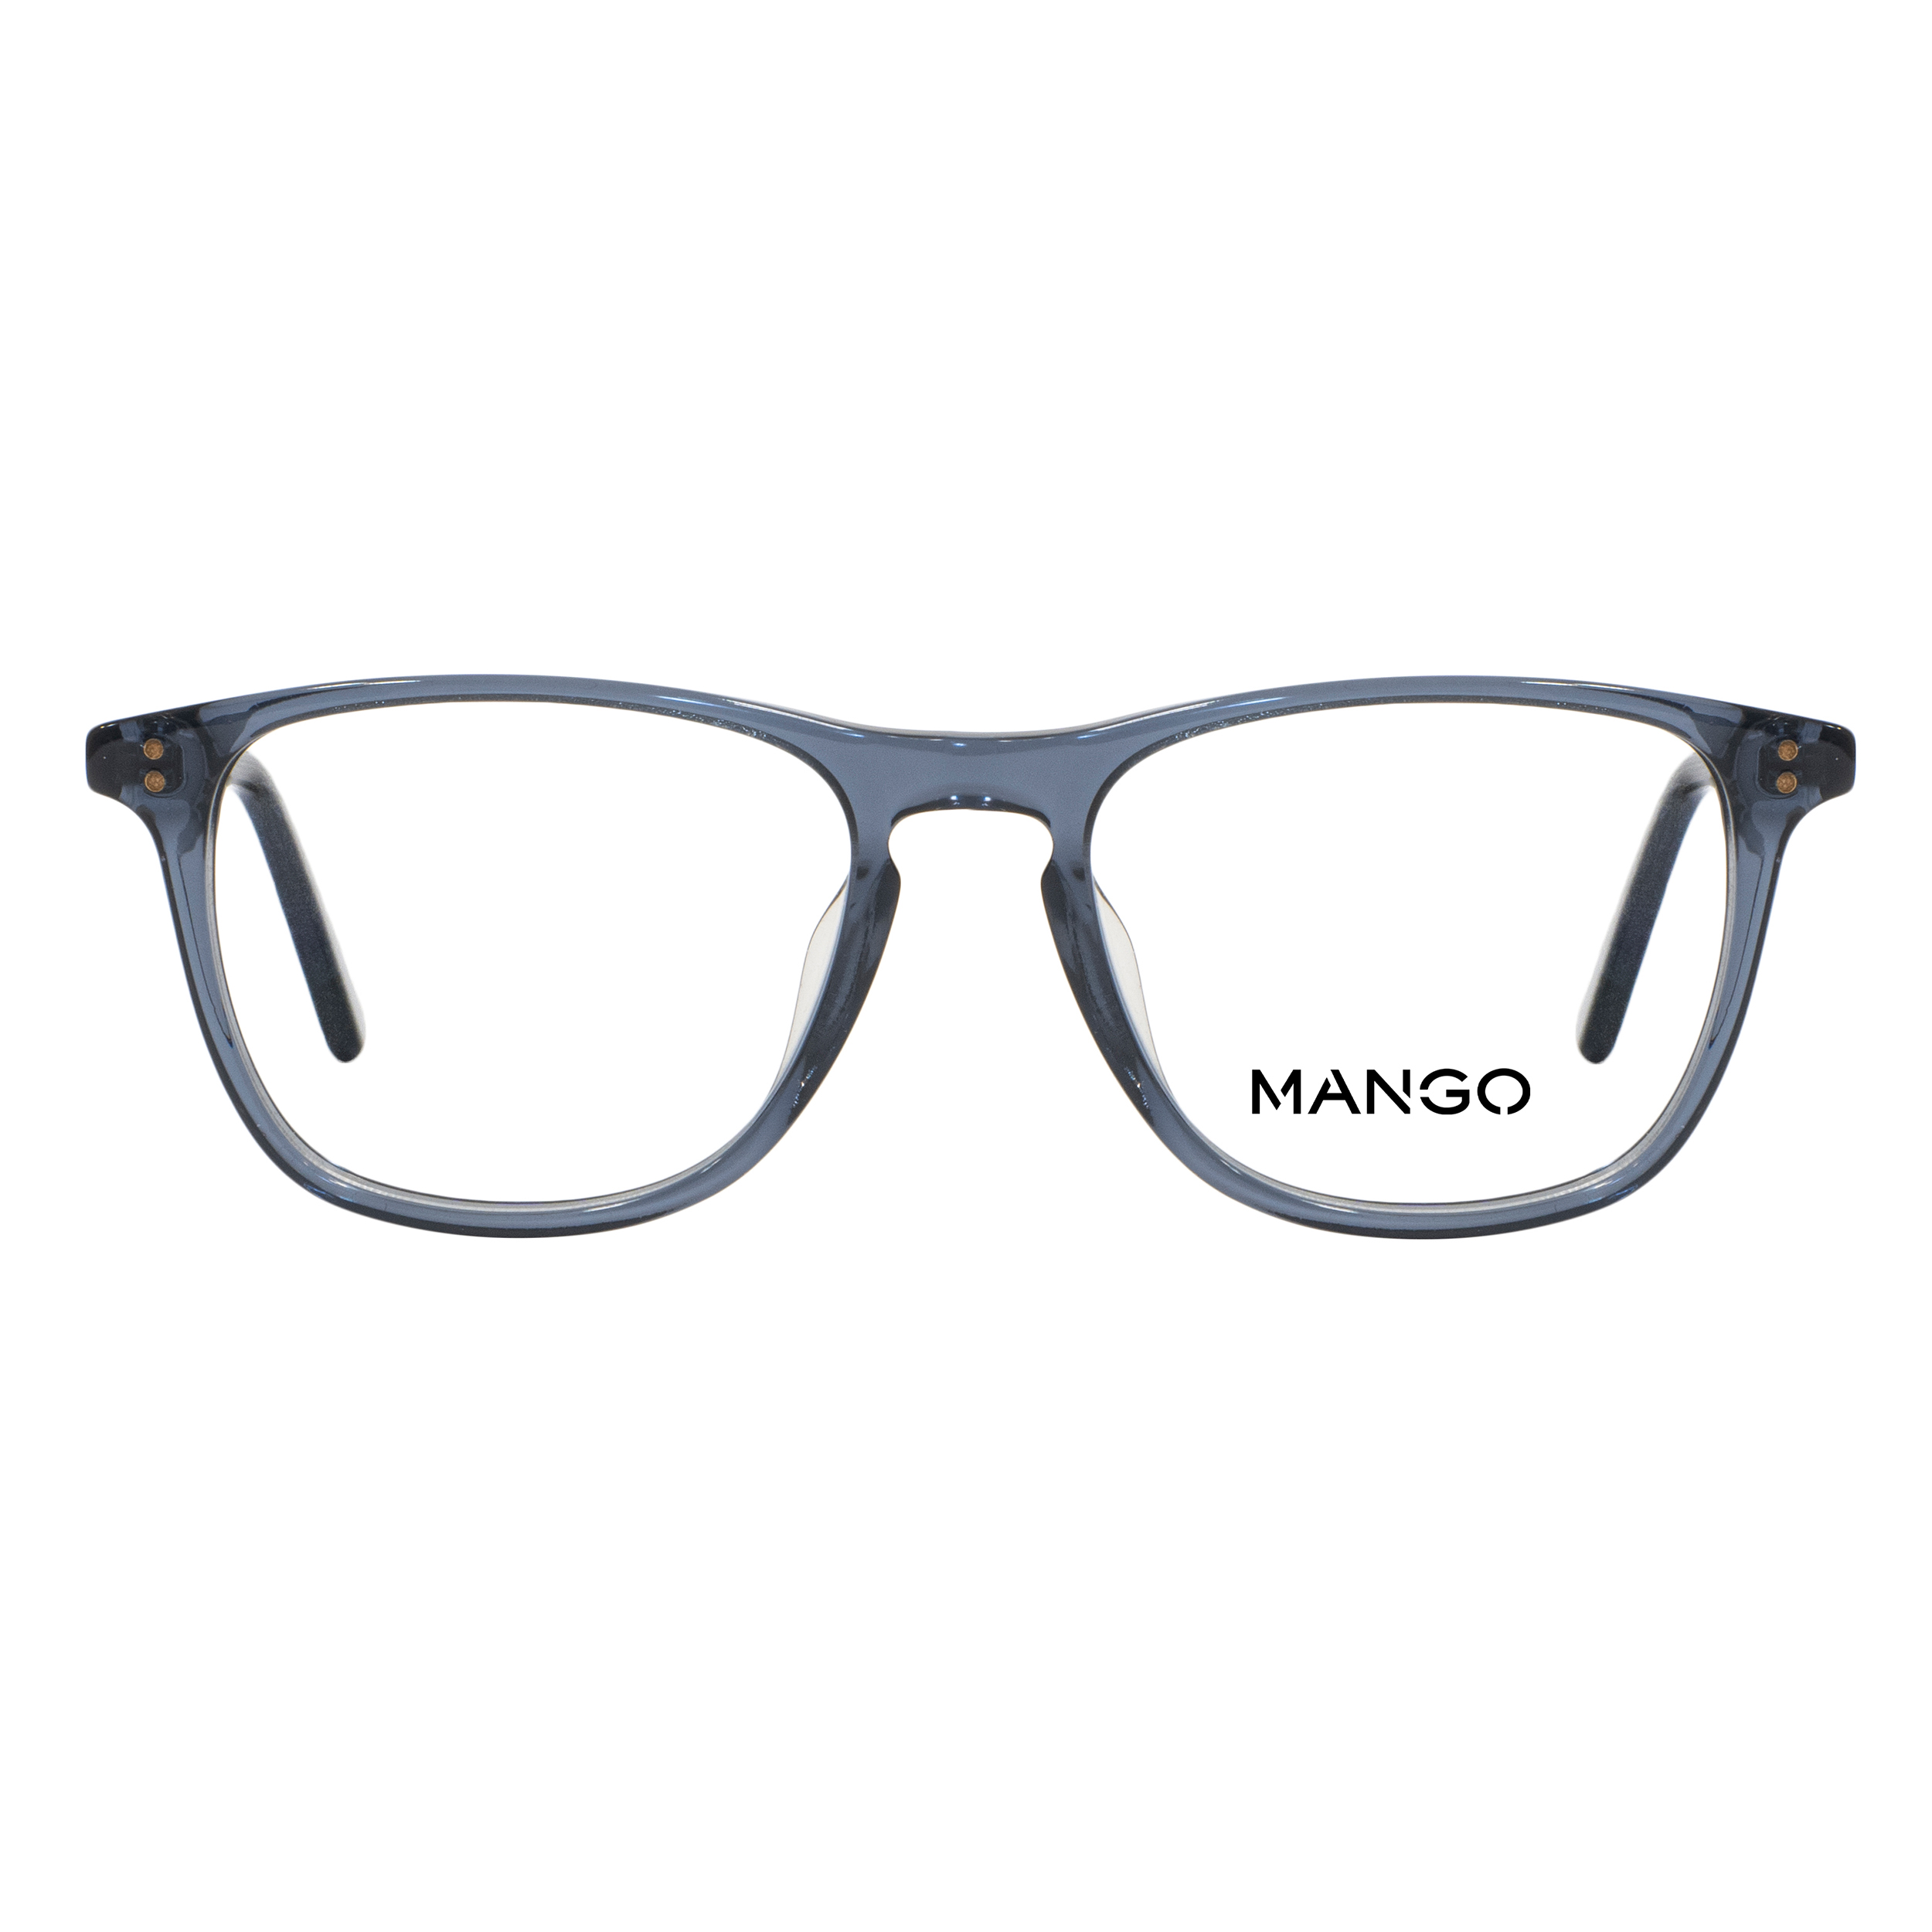 فریم عینک طبی مانگو مدل MNG177770